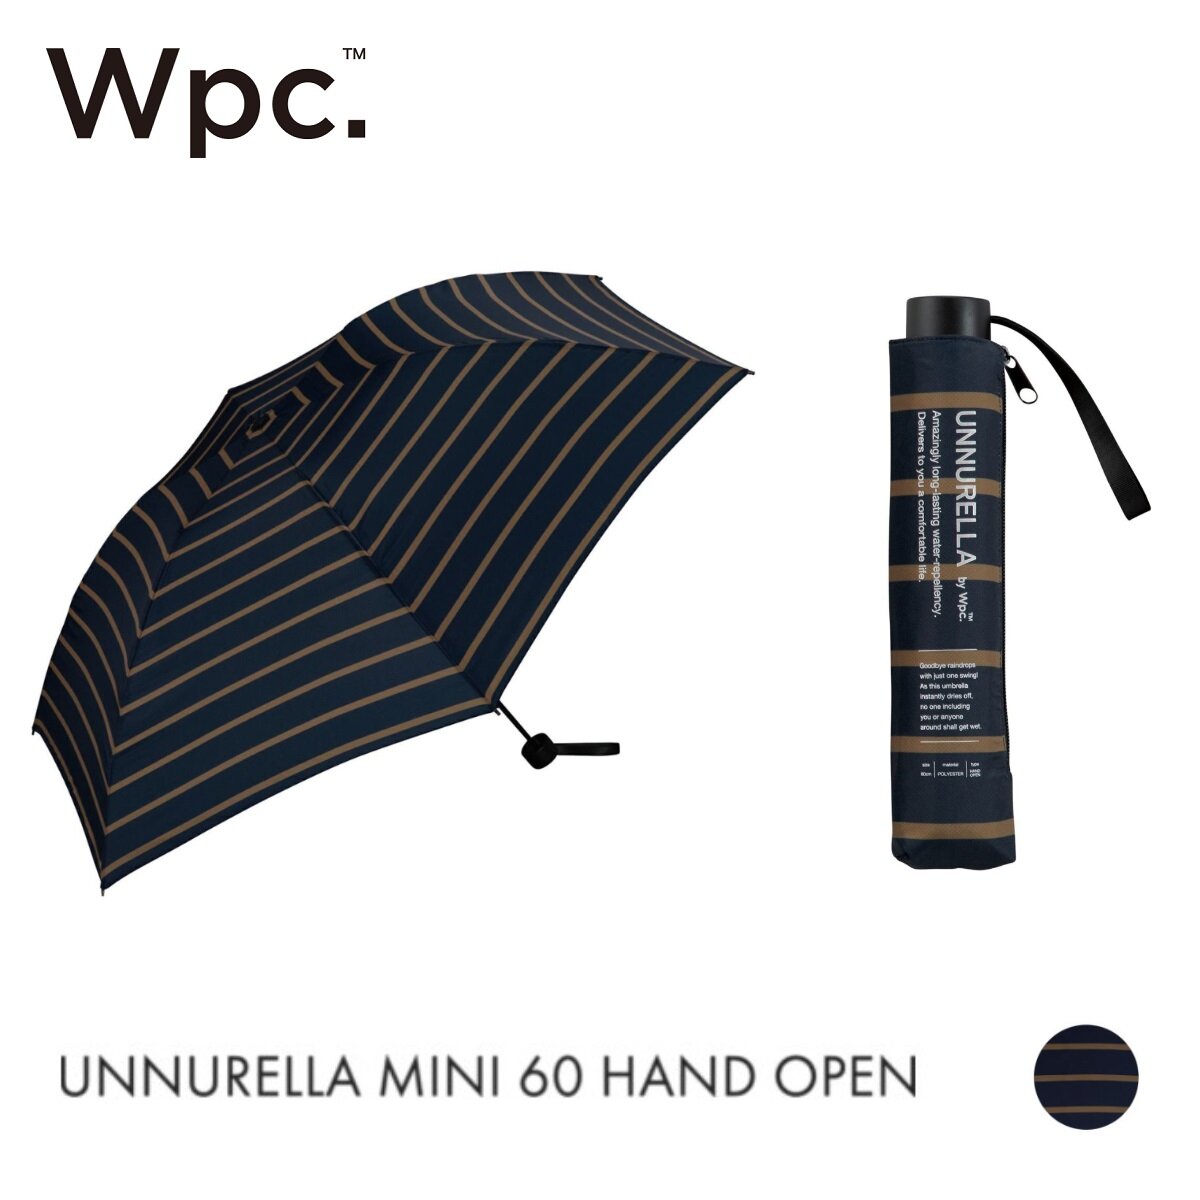 WPC - UNNURELLA MINI 60 Super Waterproof Folding Umbrella UN002｜Used in both rain and shine｜Sun protection｜Sunshade｜Retractable umbrella-brown blue horizontal room